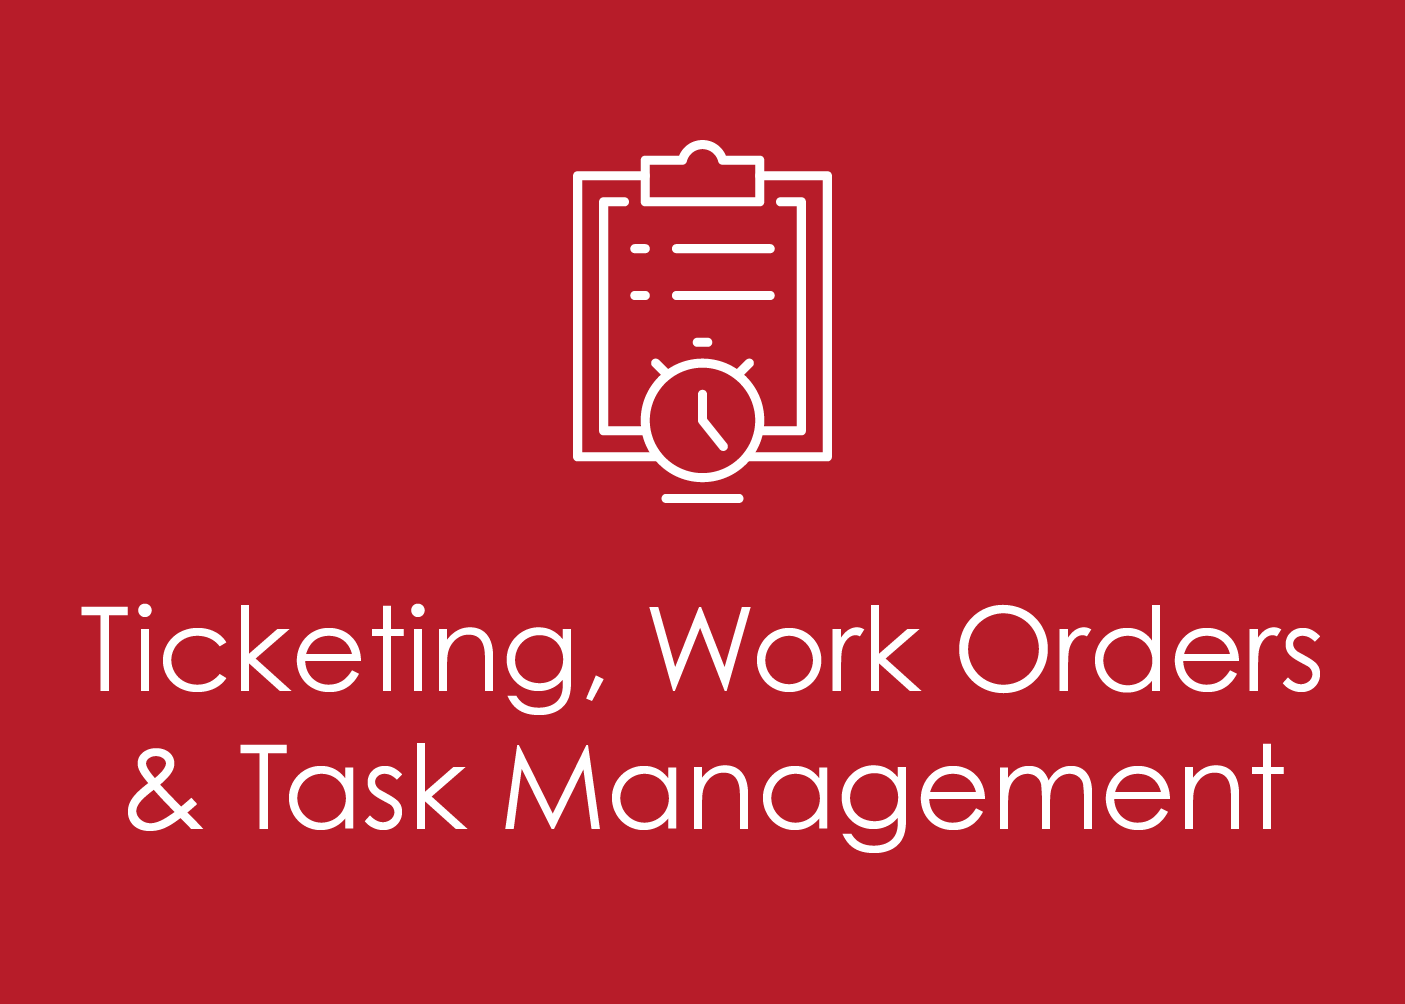 Ticketing, Work, Orders & Task Management